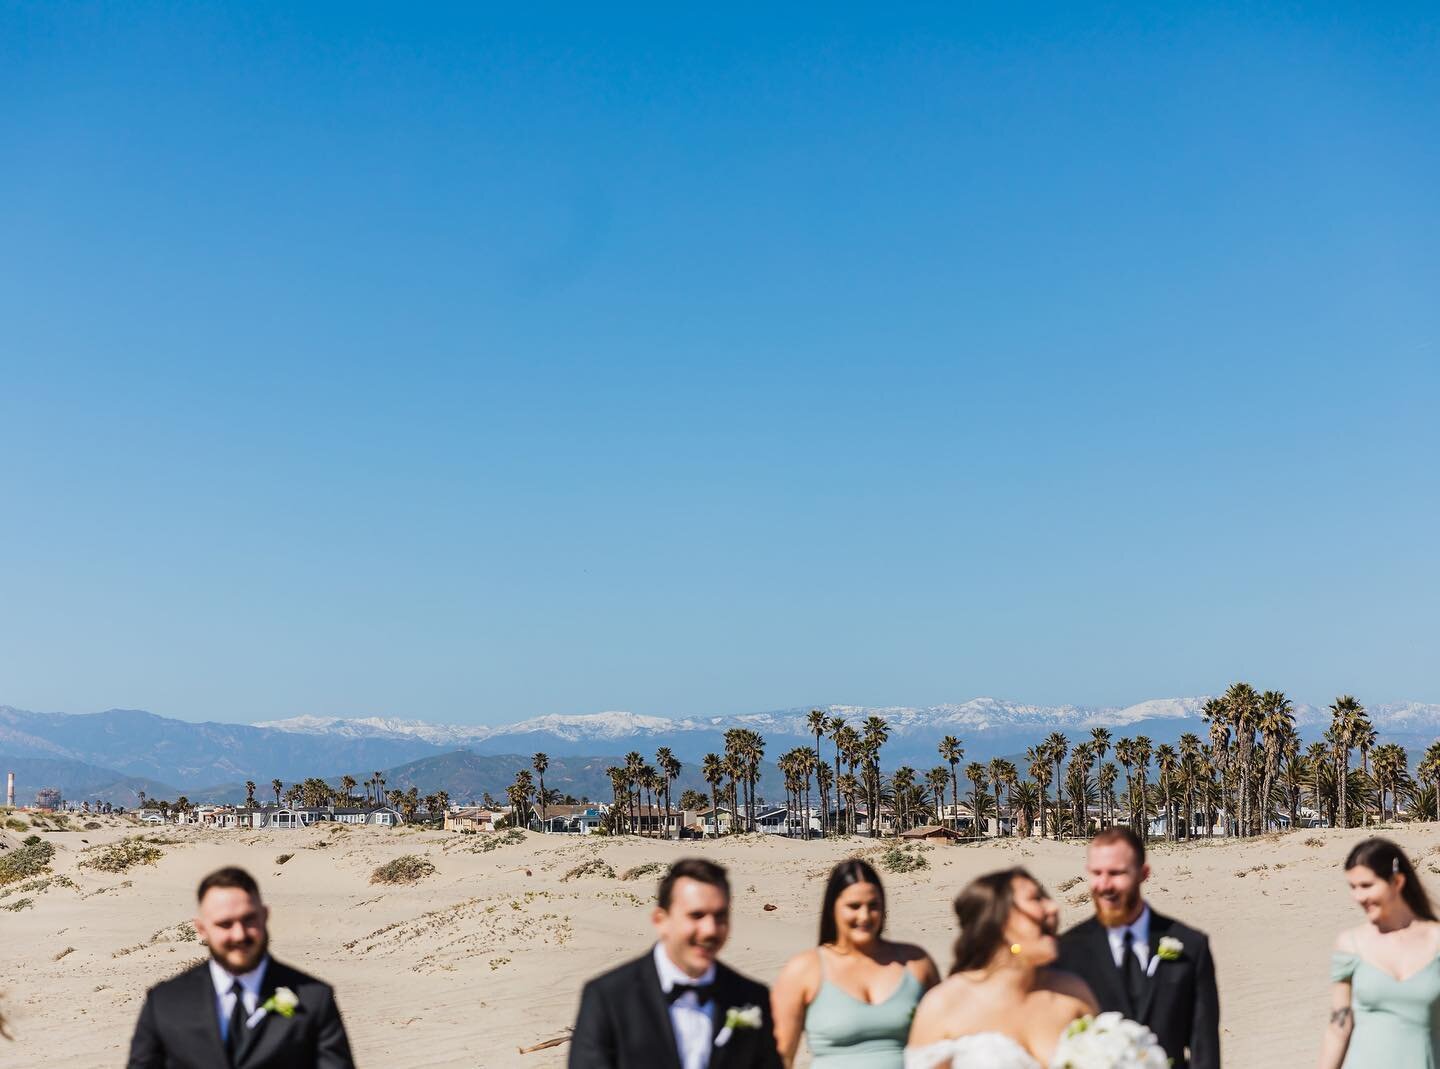 Just your run of the mill Los Angeles beach wedding with snow in the mountains ☀️ ❄️ 🏝 #jeaniehortonphotography #lasnow #oxnardwedding #lawedding #labeachwedding #socalbeachwedding #caweddingphotographer #cawedding #beachsnow #bridalparty #santabarb